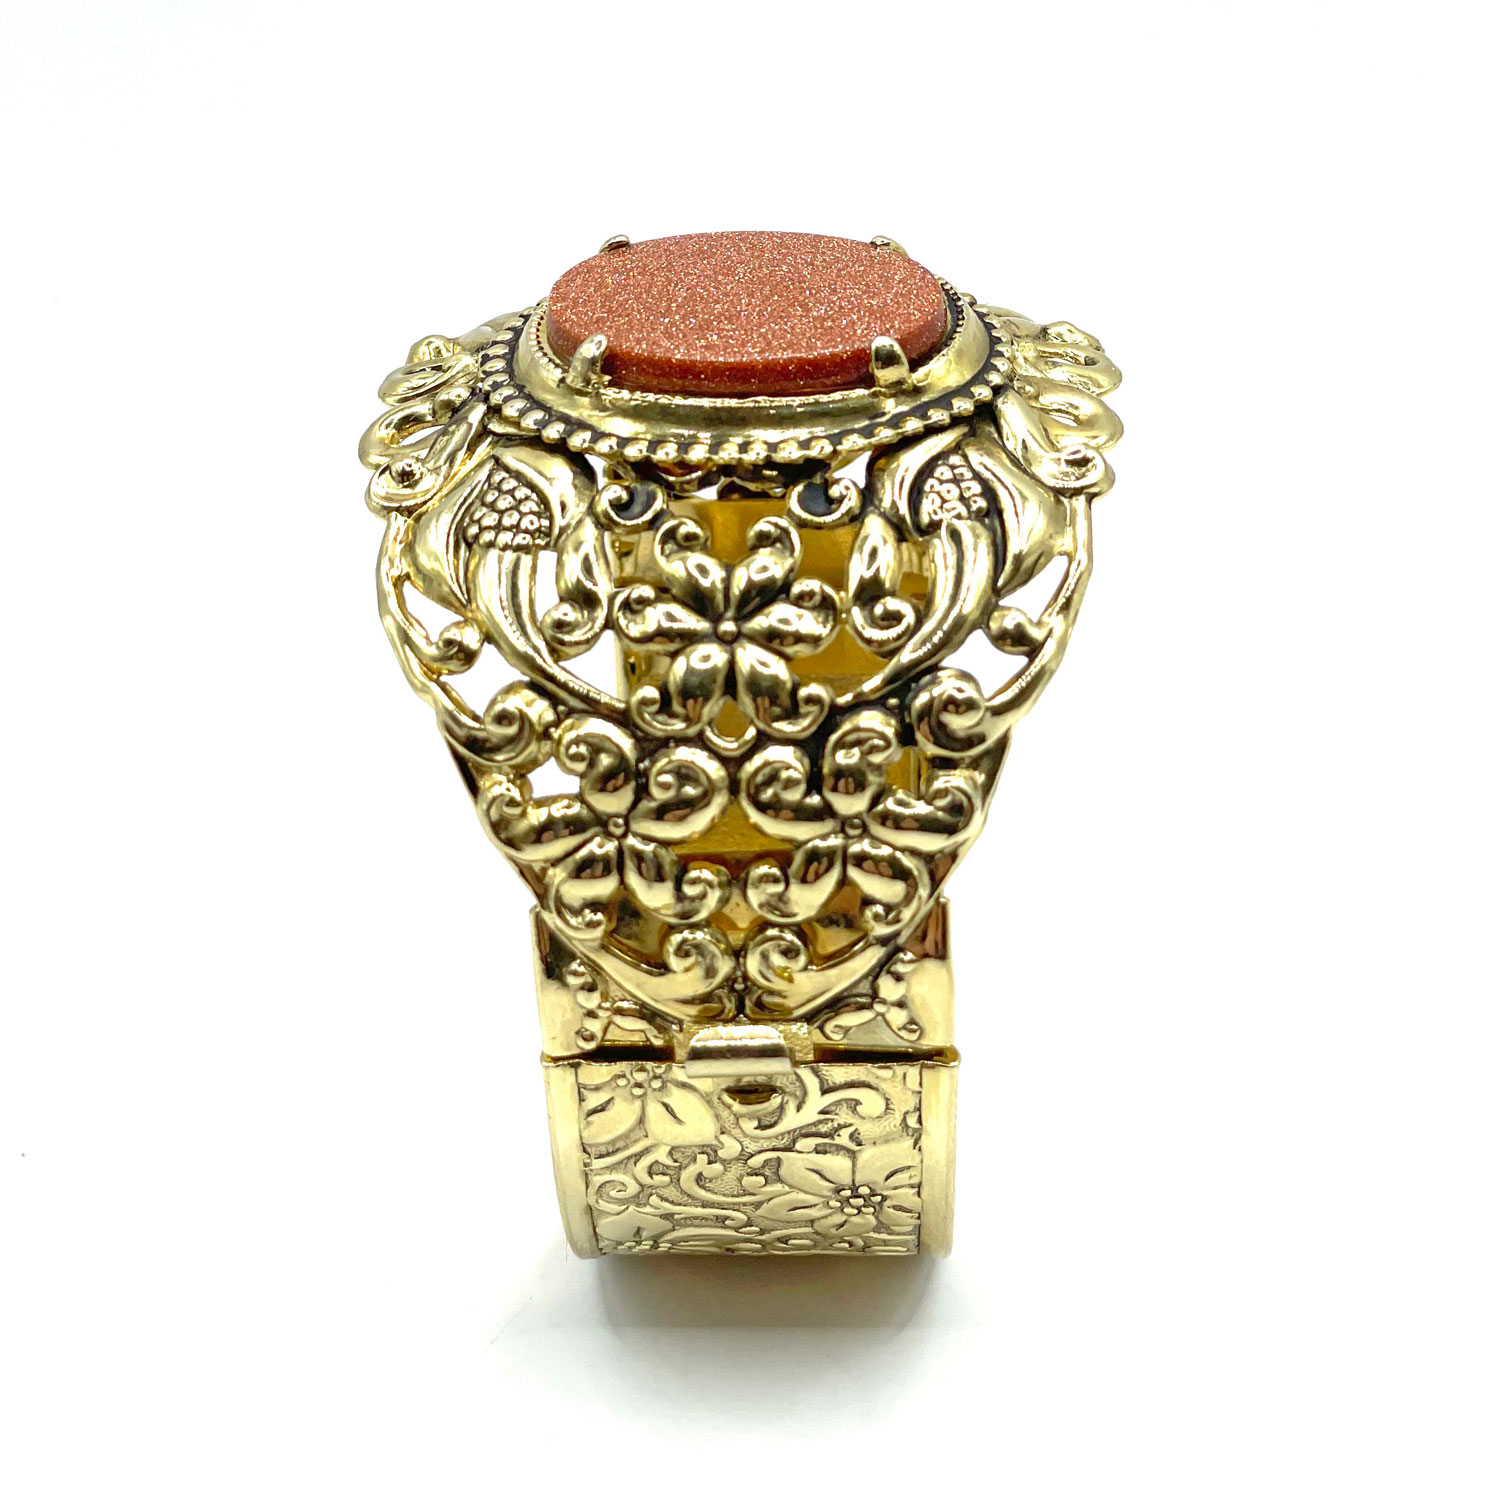 Goldstone bangle bracelet